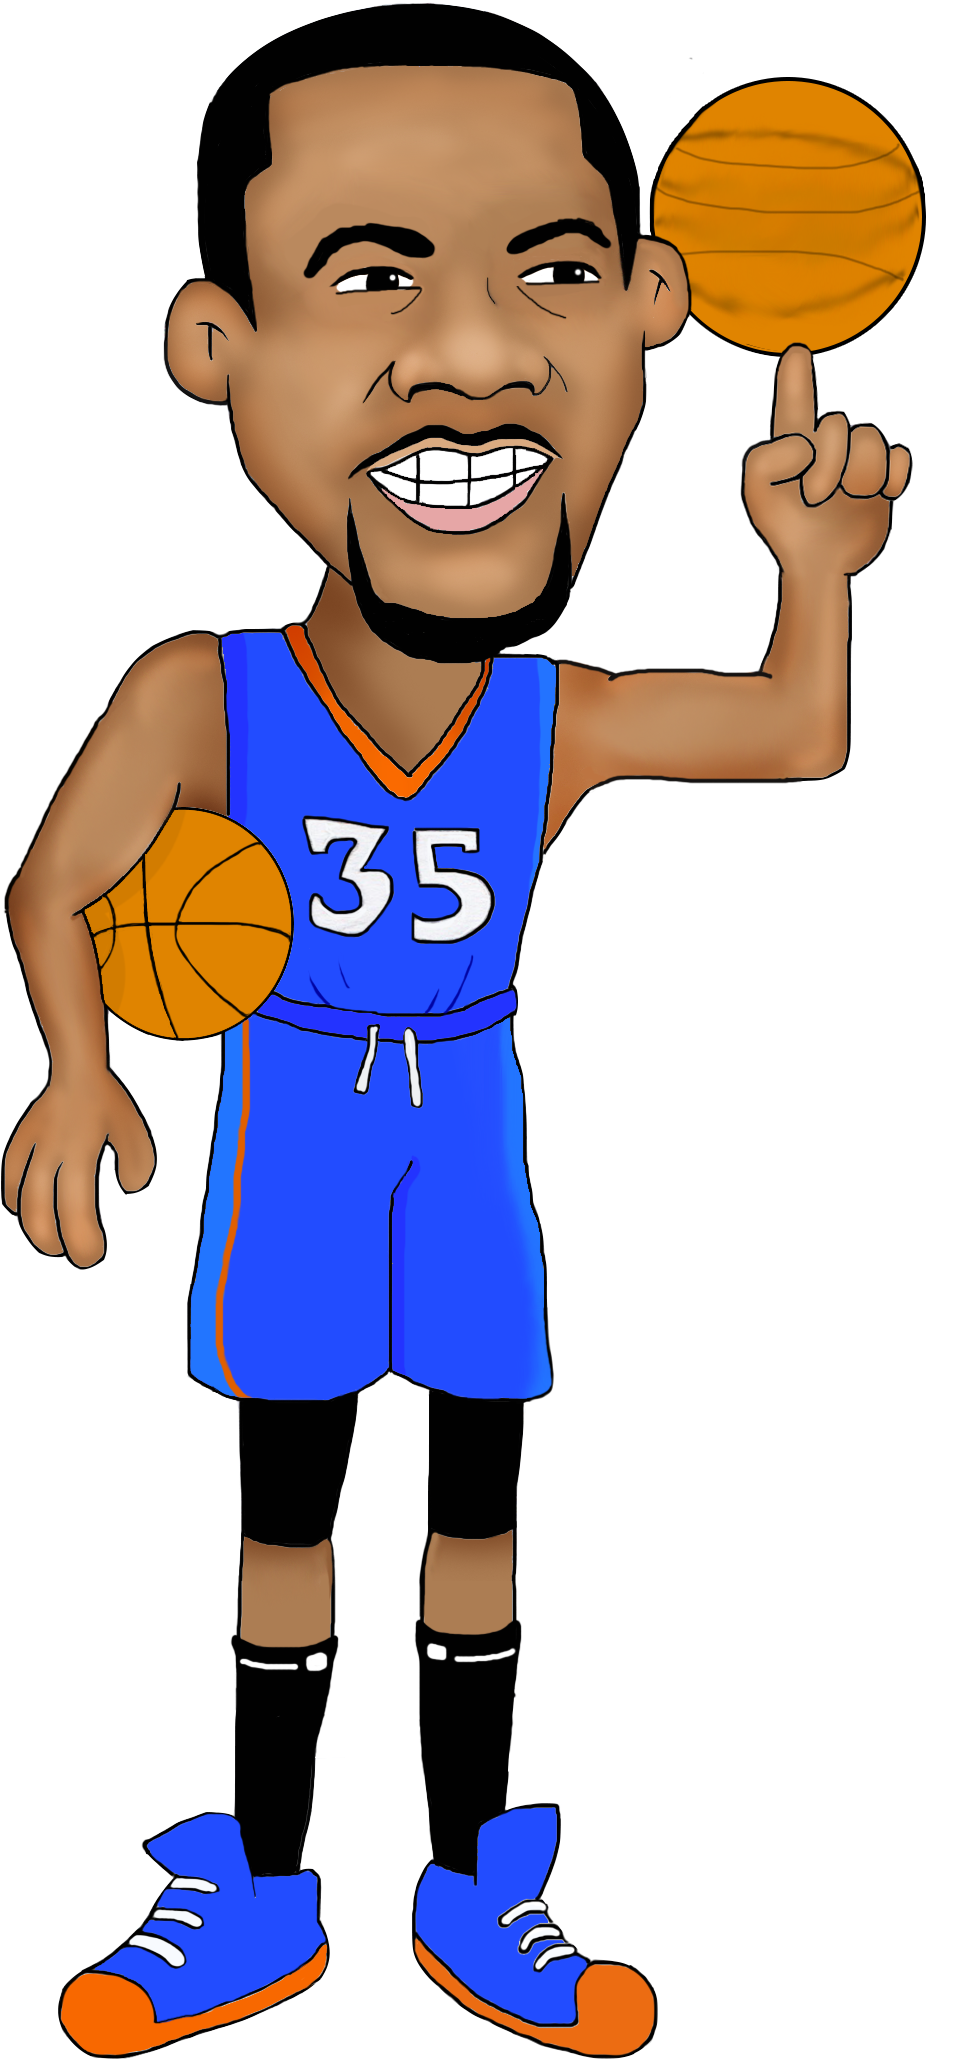 Cartoon Of A Basketball Player